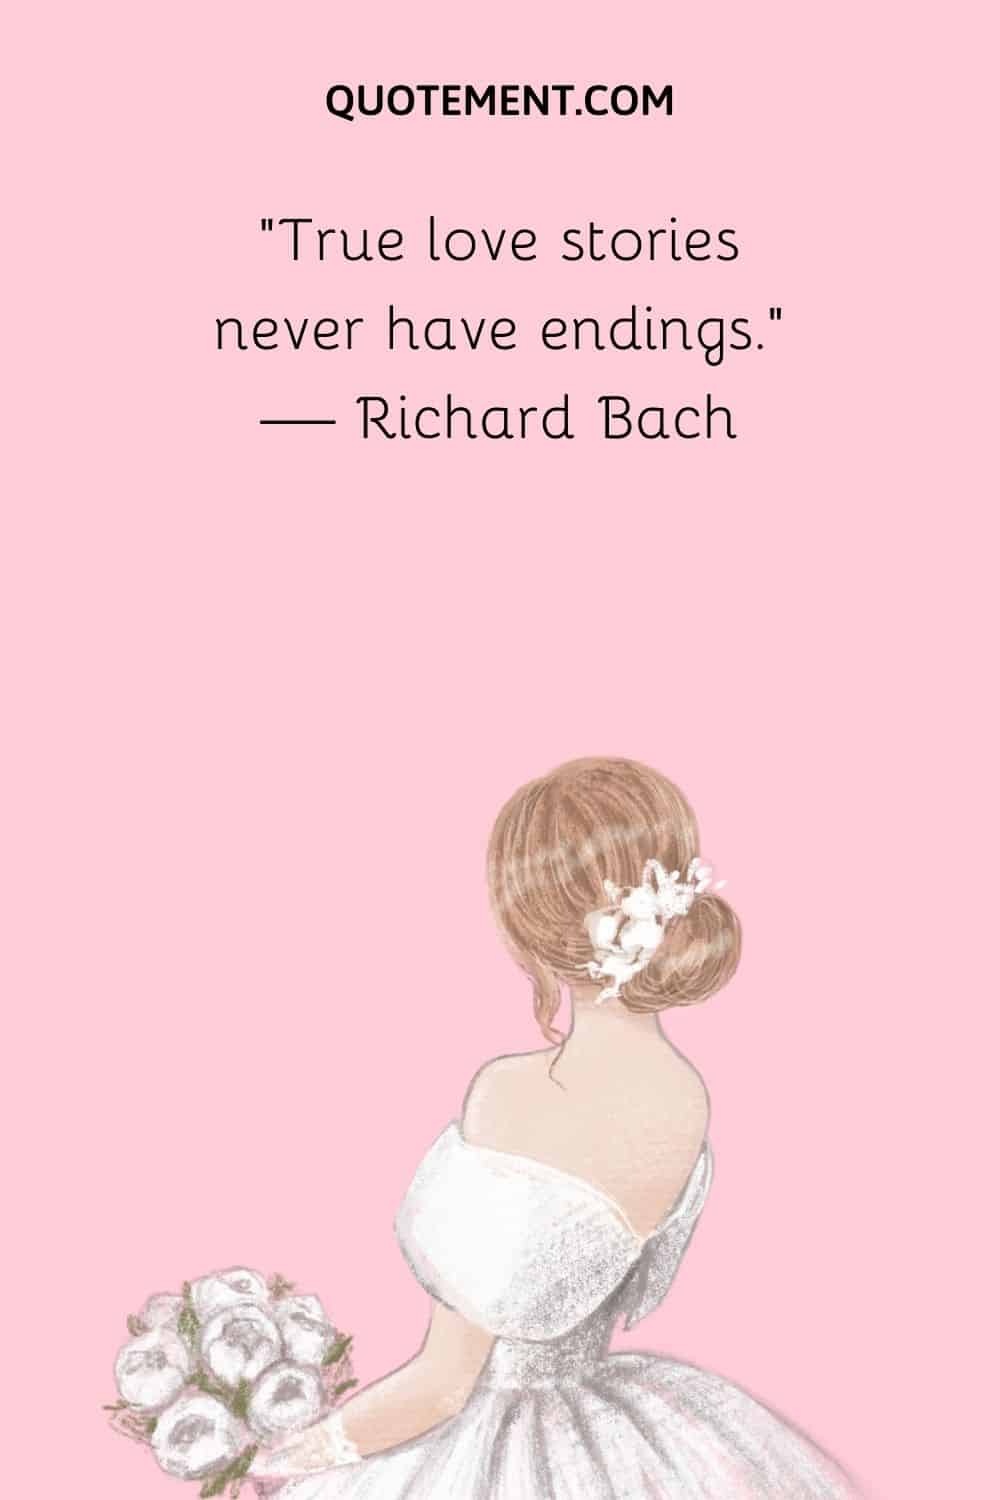 “True love stories never have endings.” — Richard Bach